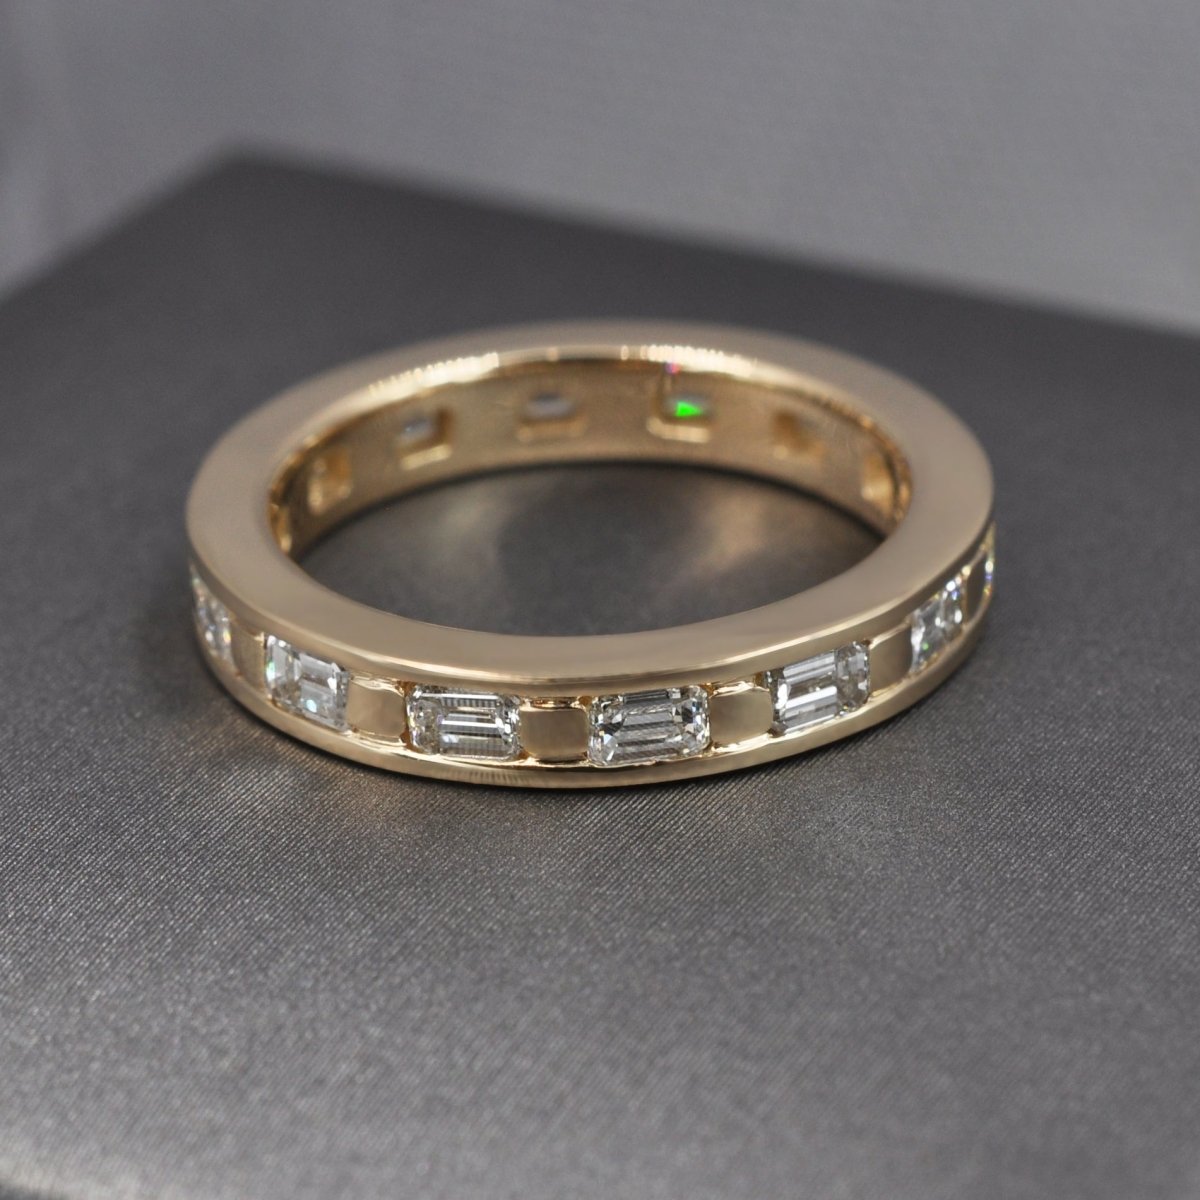 Stunning 2.50 CT Emerald Cut Diamond Eternity Ring in 14KT Yellow Gold - Primestyle.com